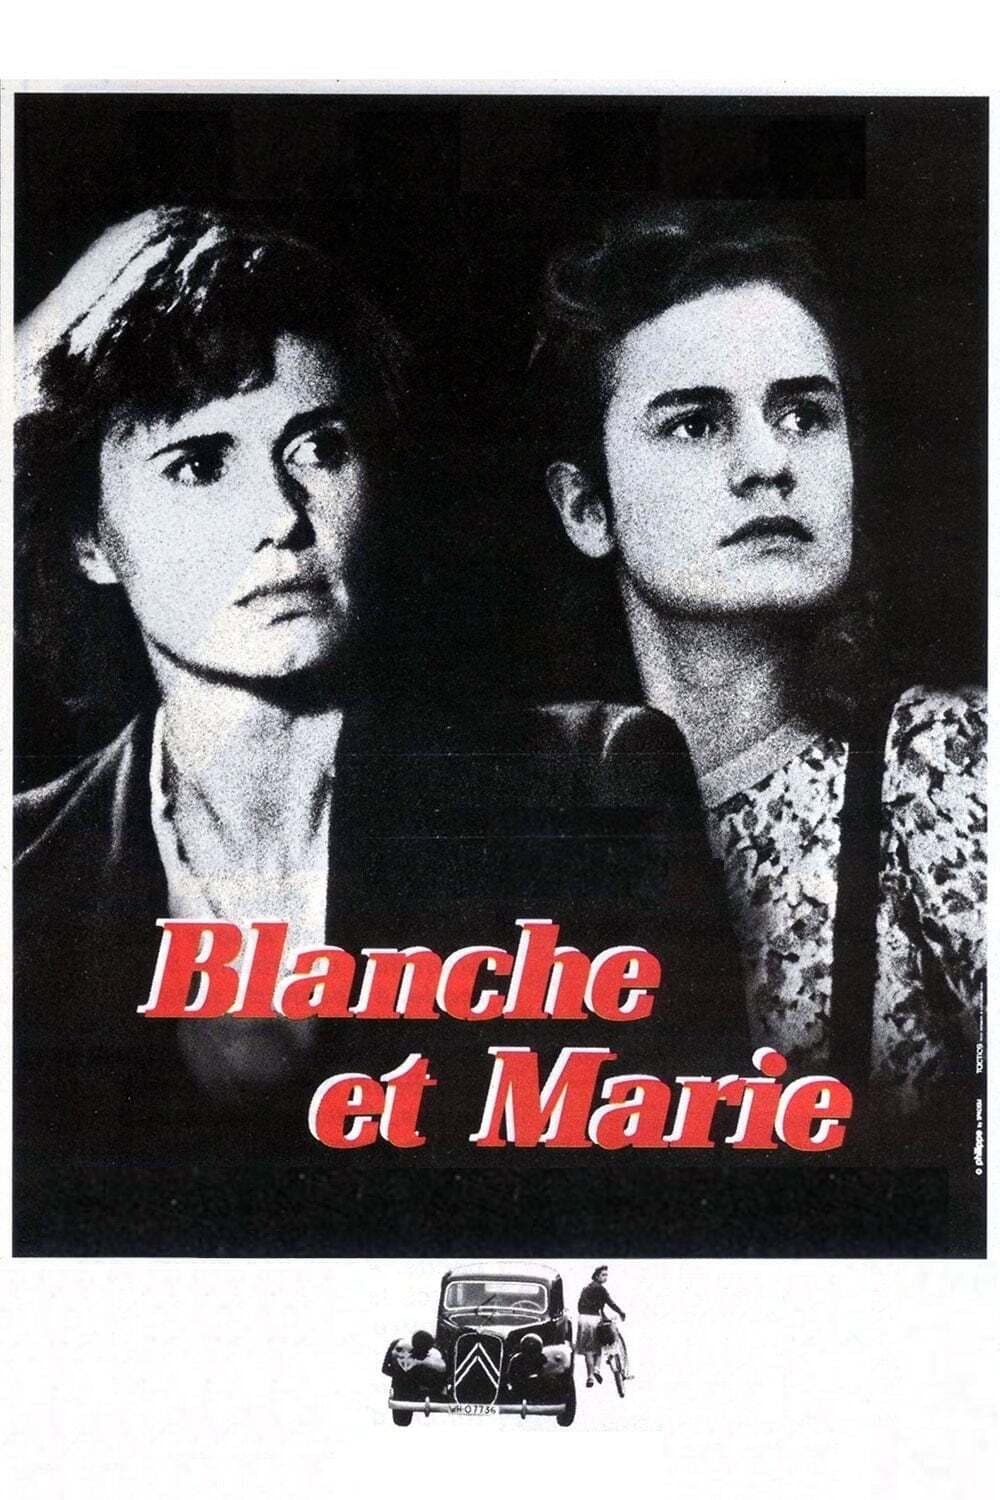 Blanche y Marie